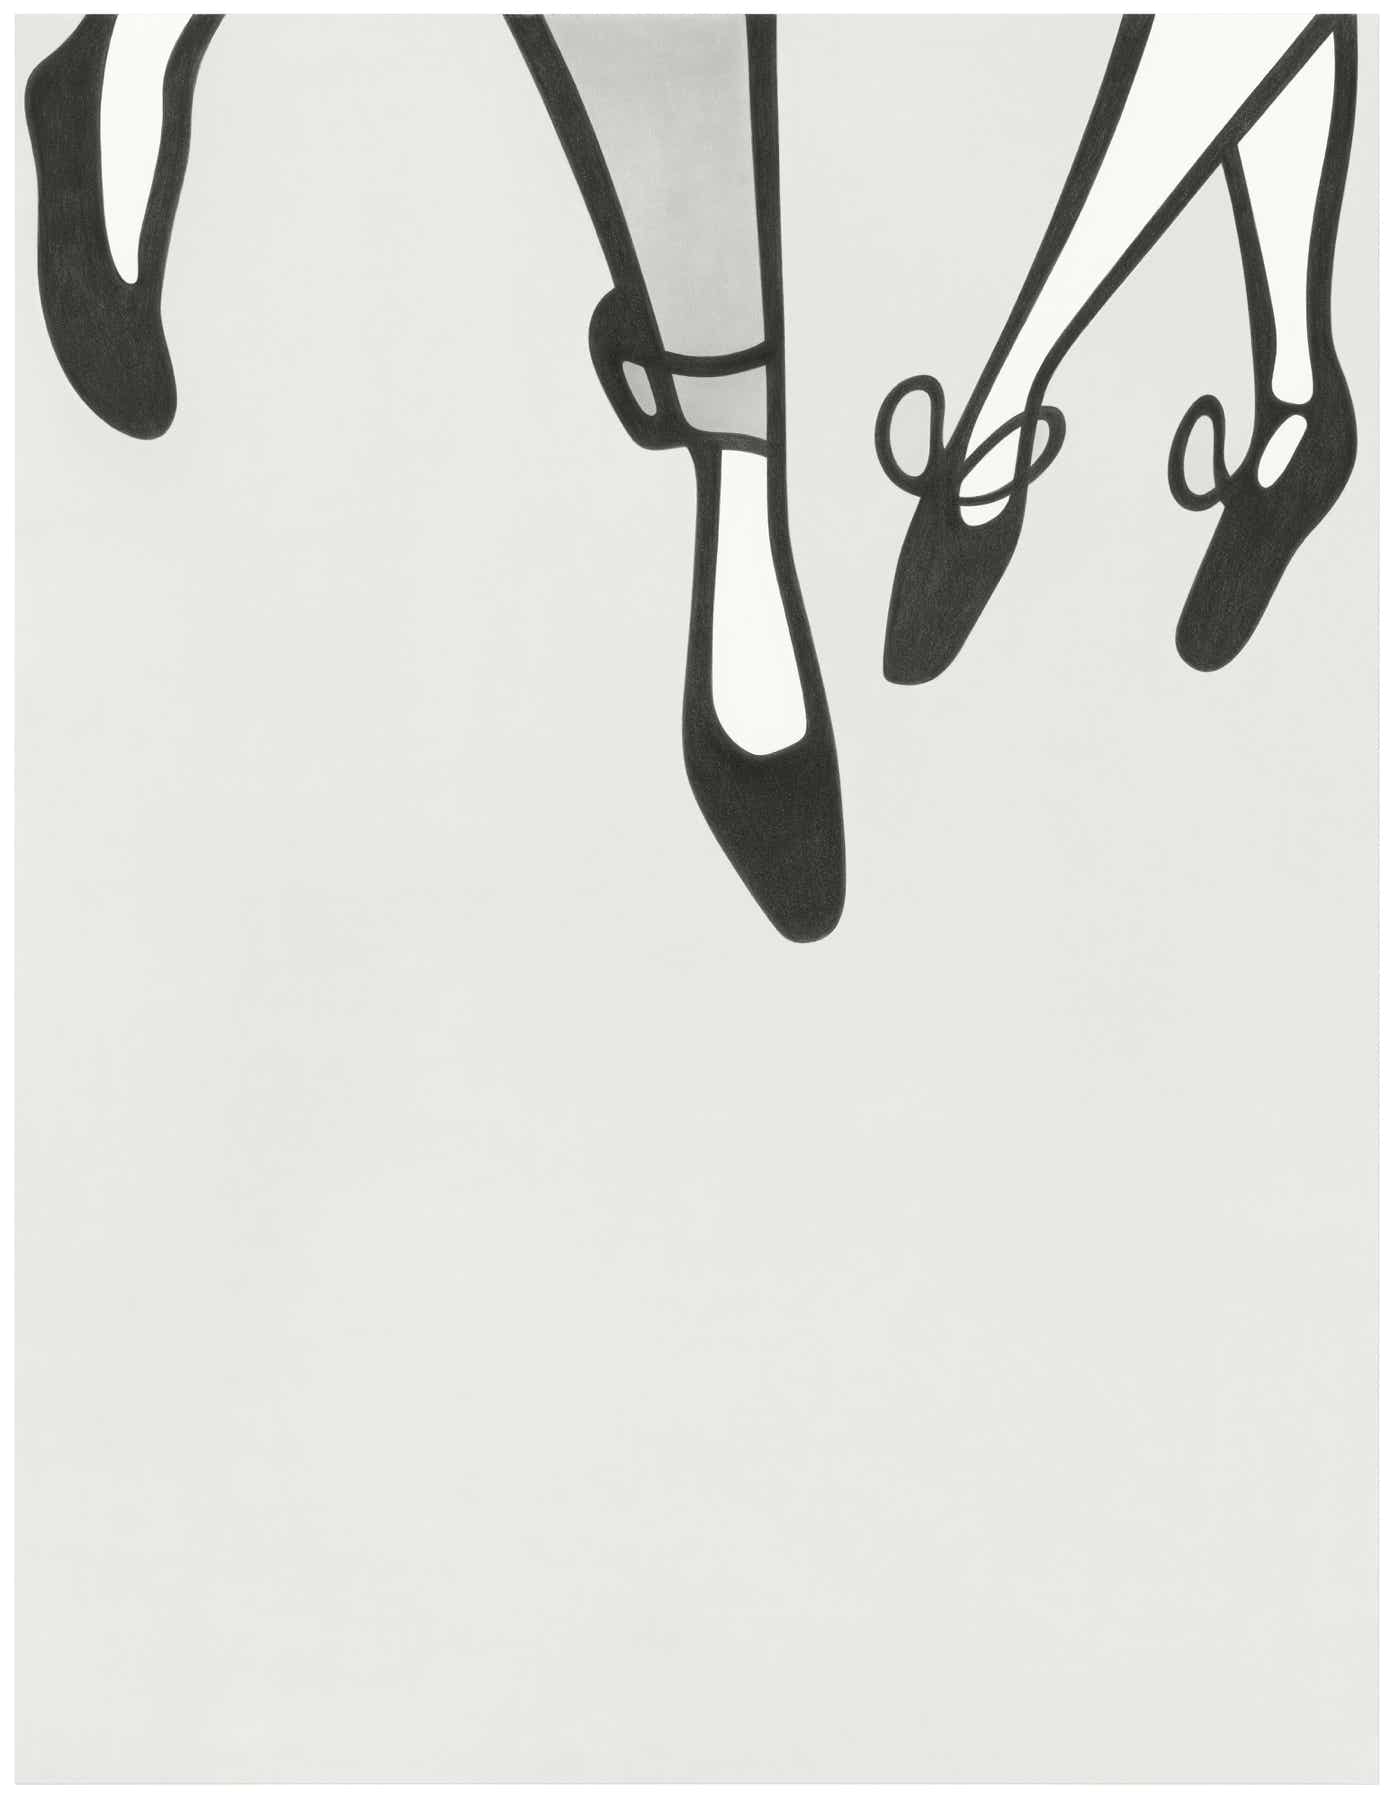 Pencil drawing of the series »Klandestine Geschichten« [Clandestine Stories] by Herbert Stattler.